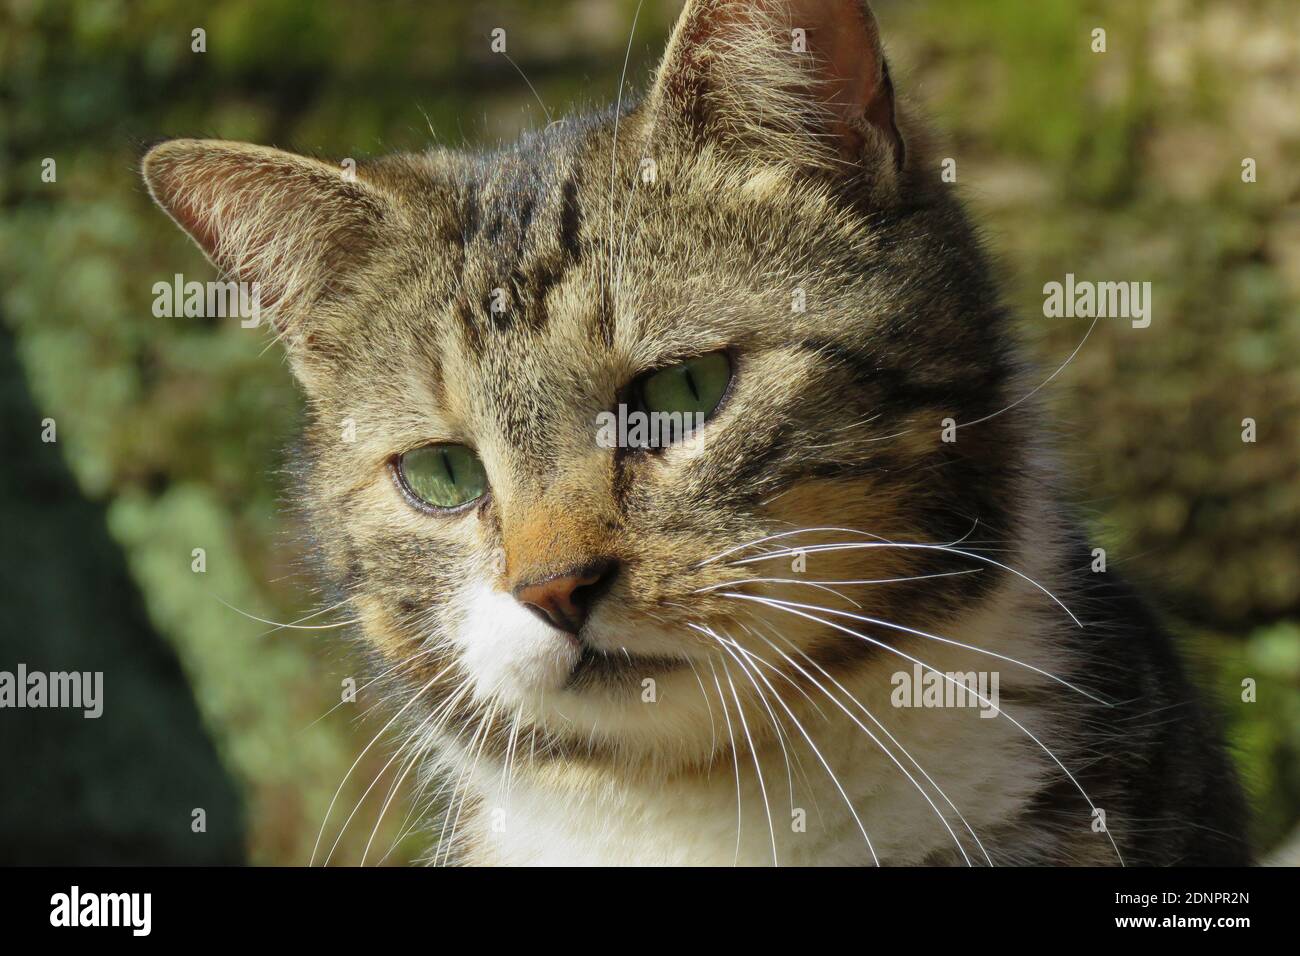 Close-up Portrait Of A Cat Stock Photo